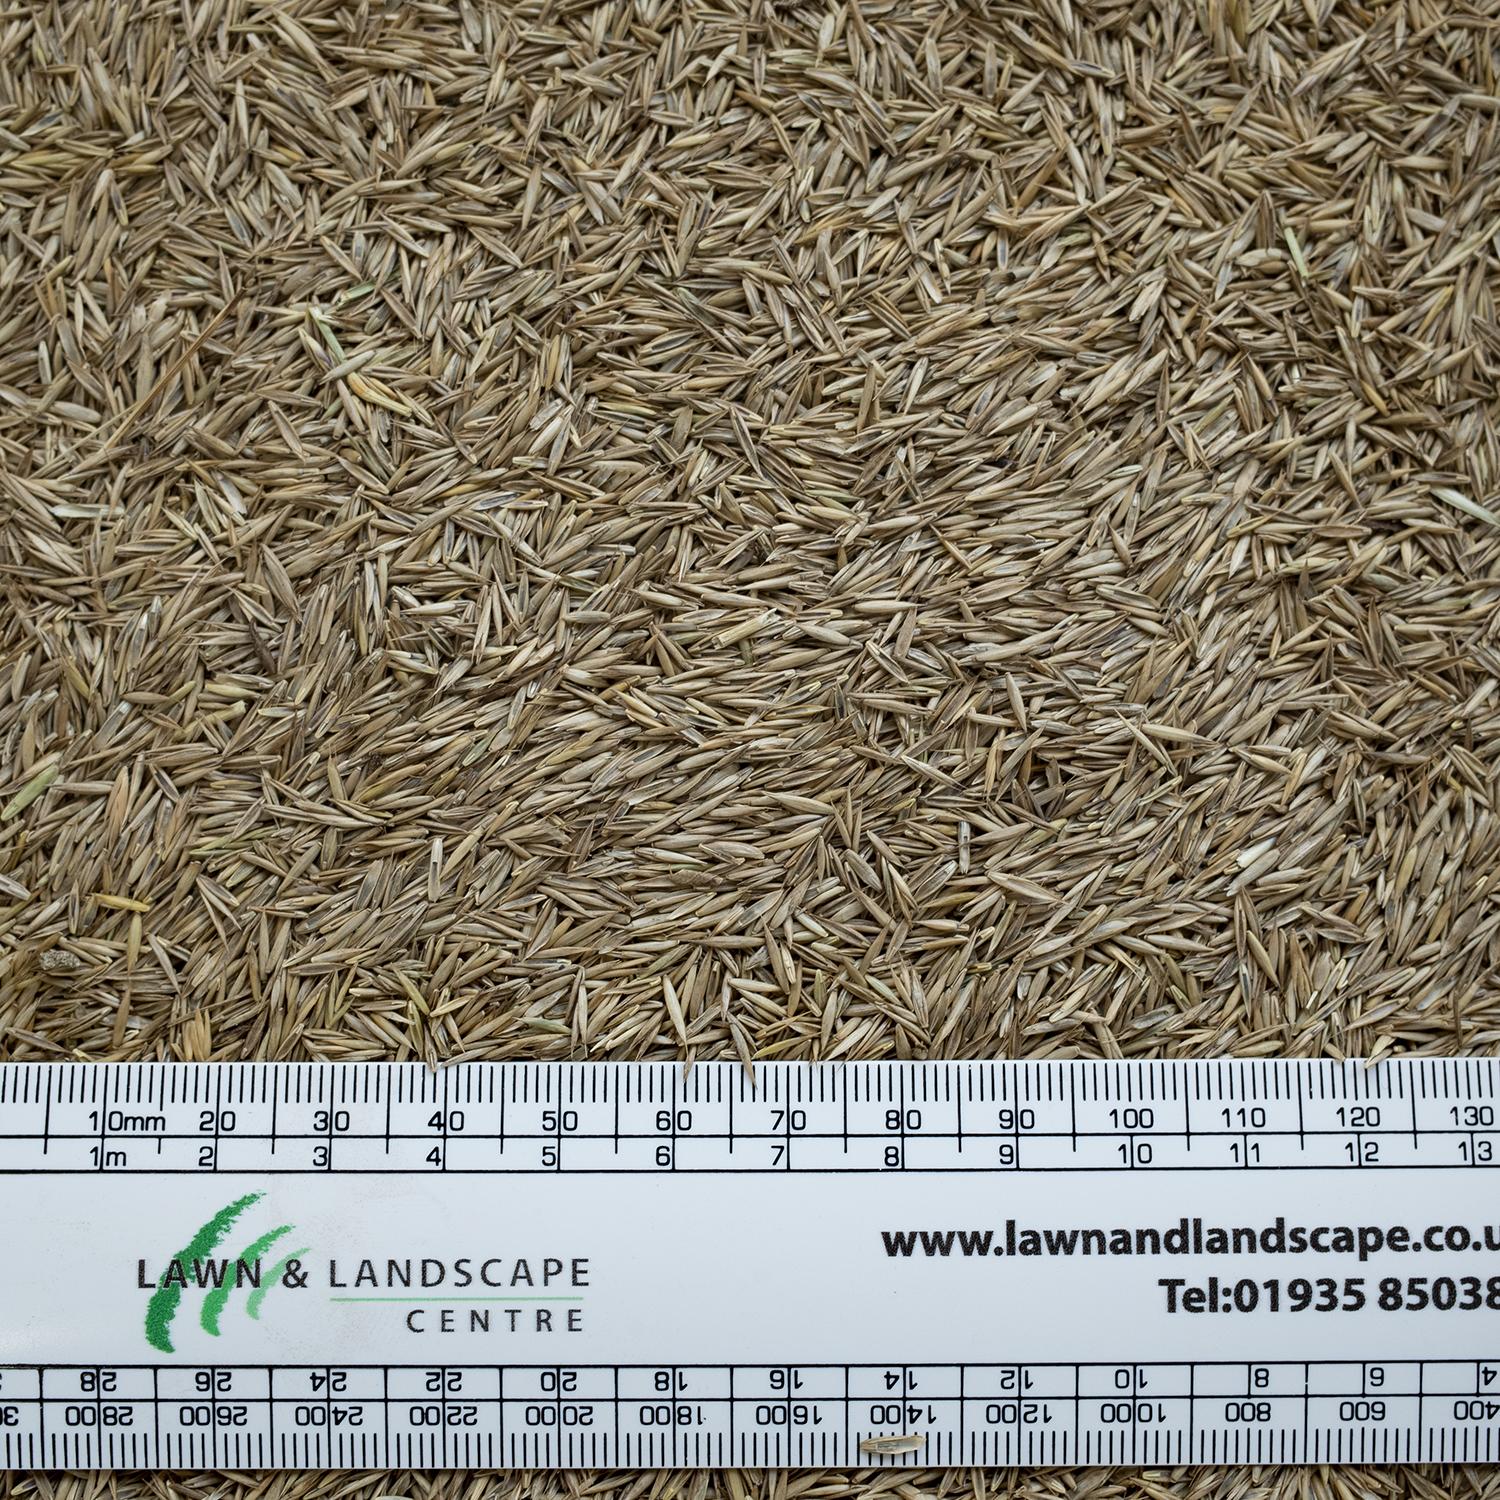 Sherborne Turf Grass Seed